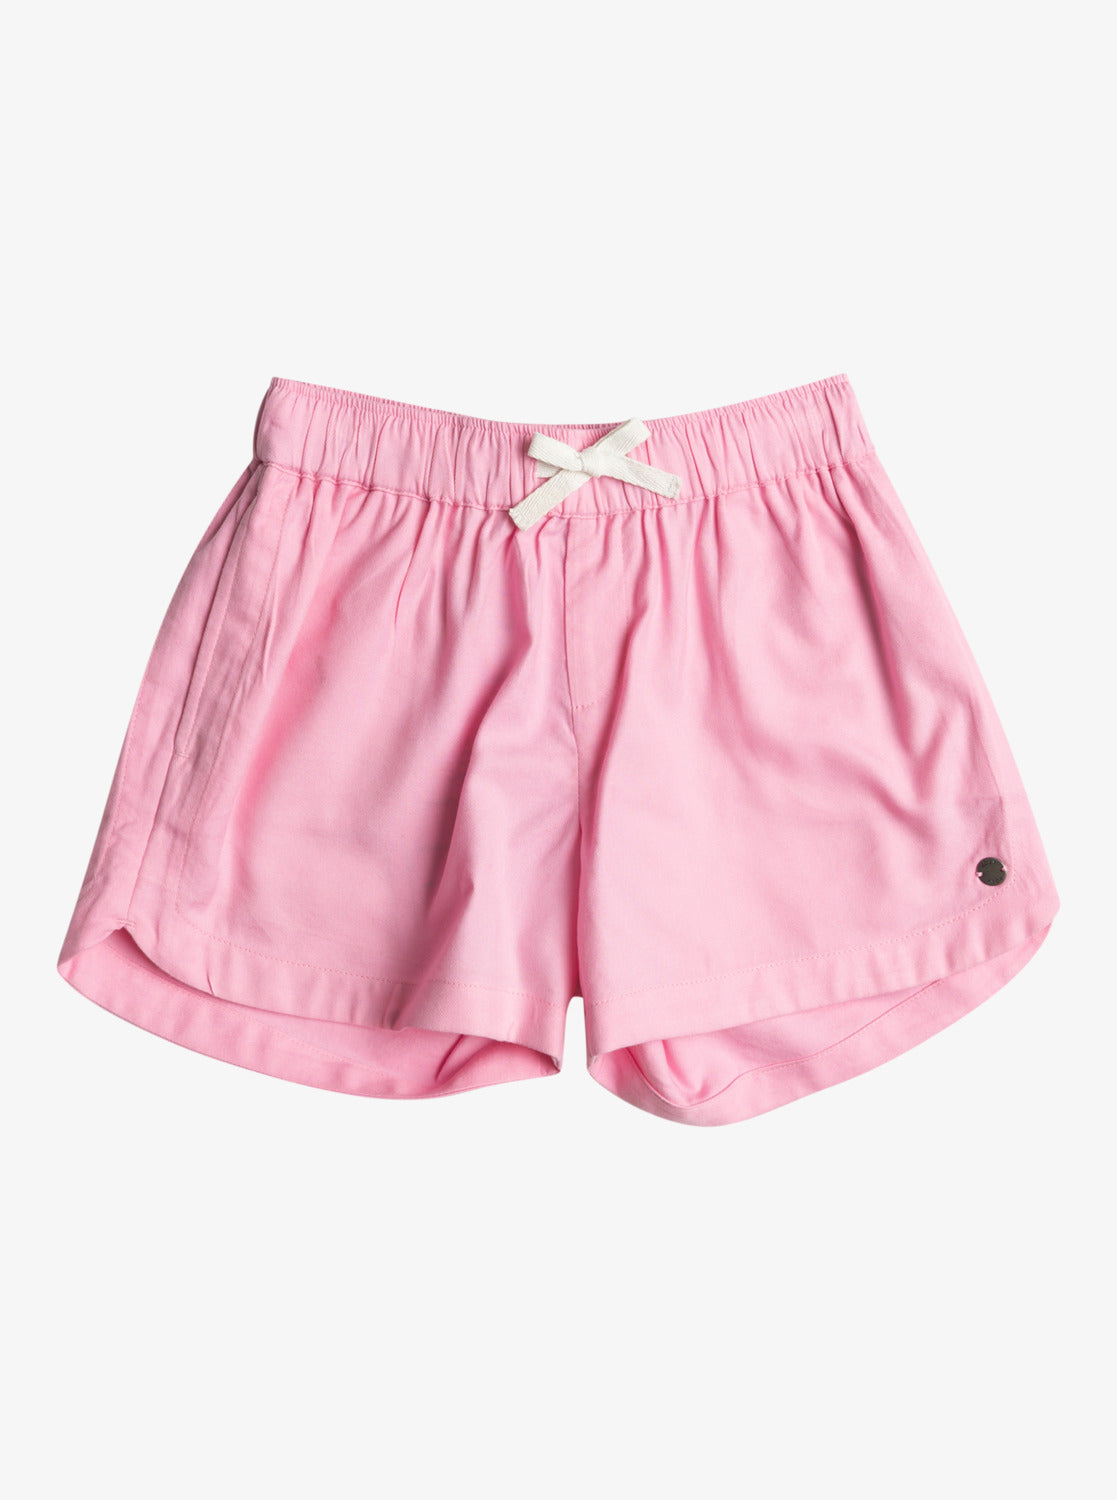 Girls 4-16 Una Mattina Shorts - Prism Pink